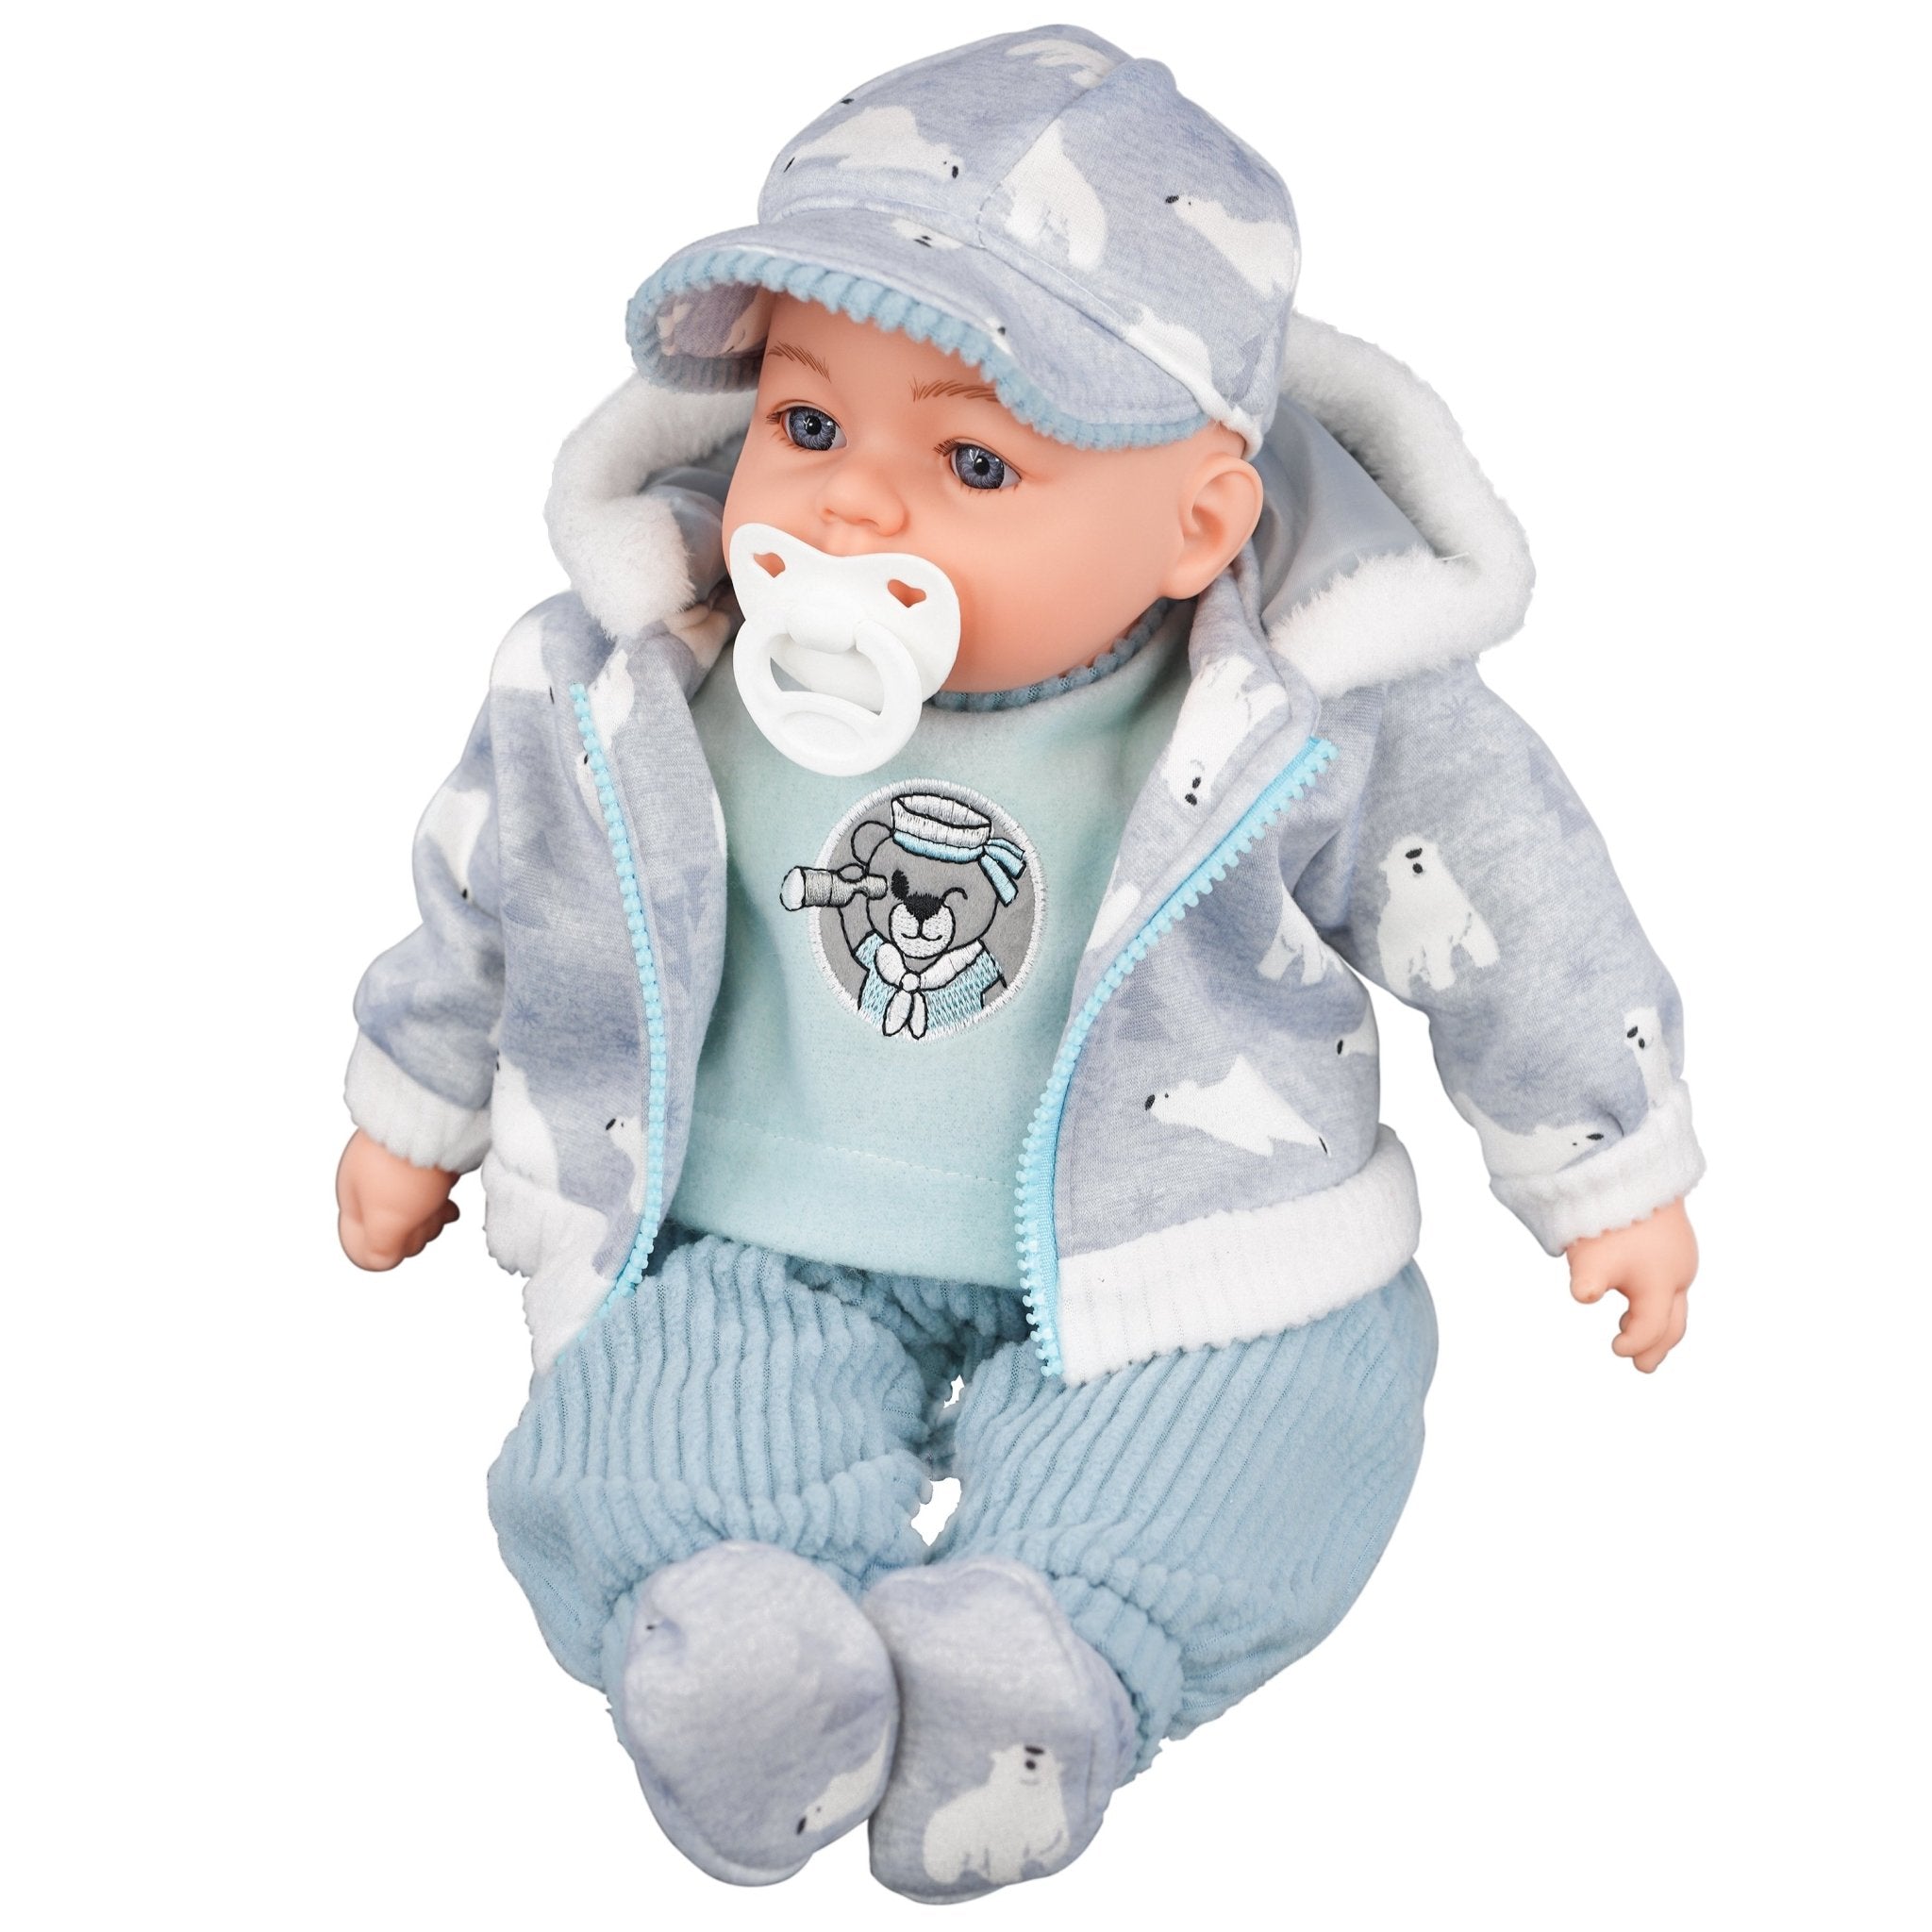 18" Soft Bodied Baby Doll Boys Toy BiBi Doll - The Magic Toy Shop